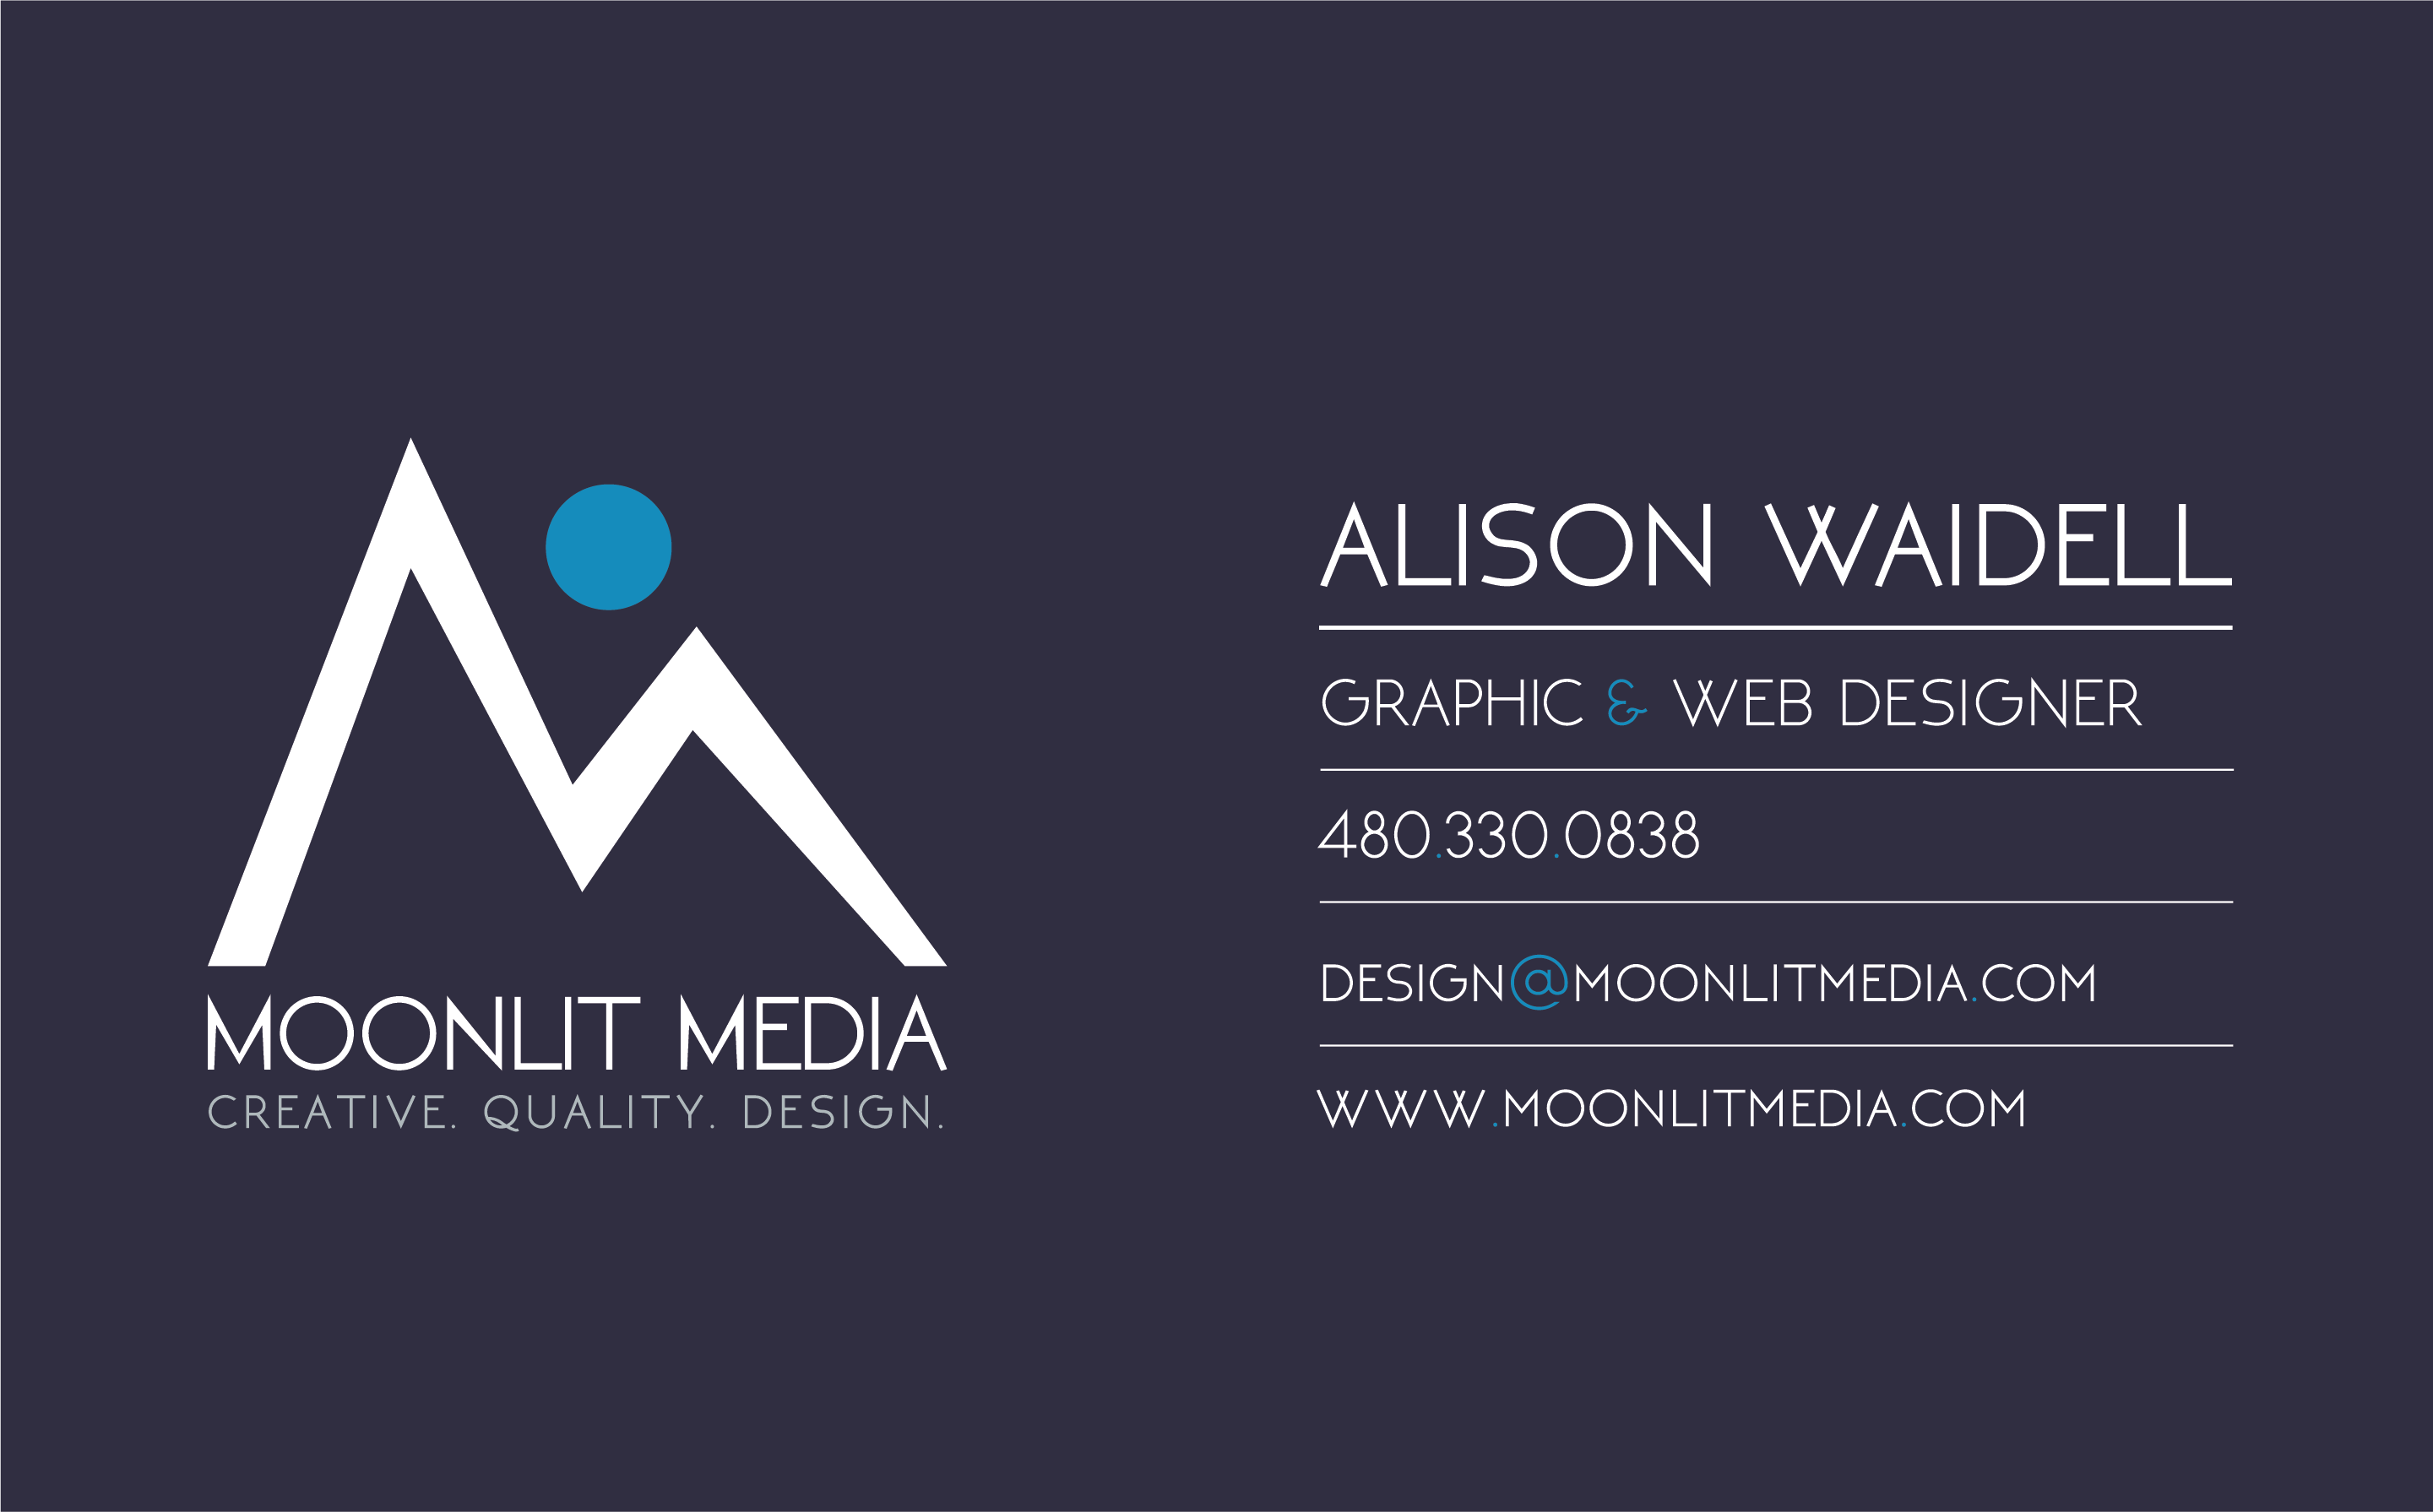 Moonlit Media - Logos, Graphics, Websites